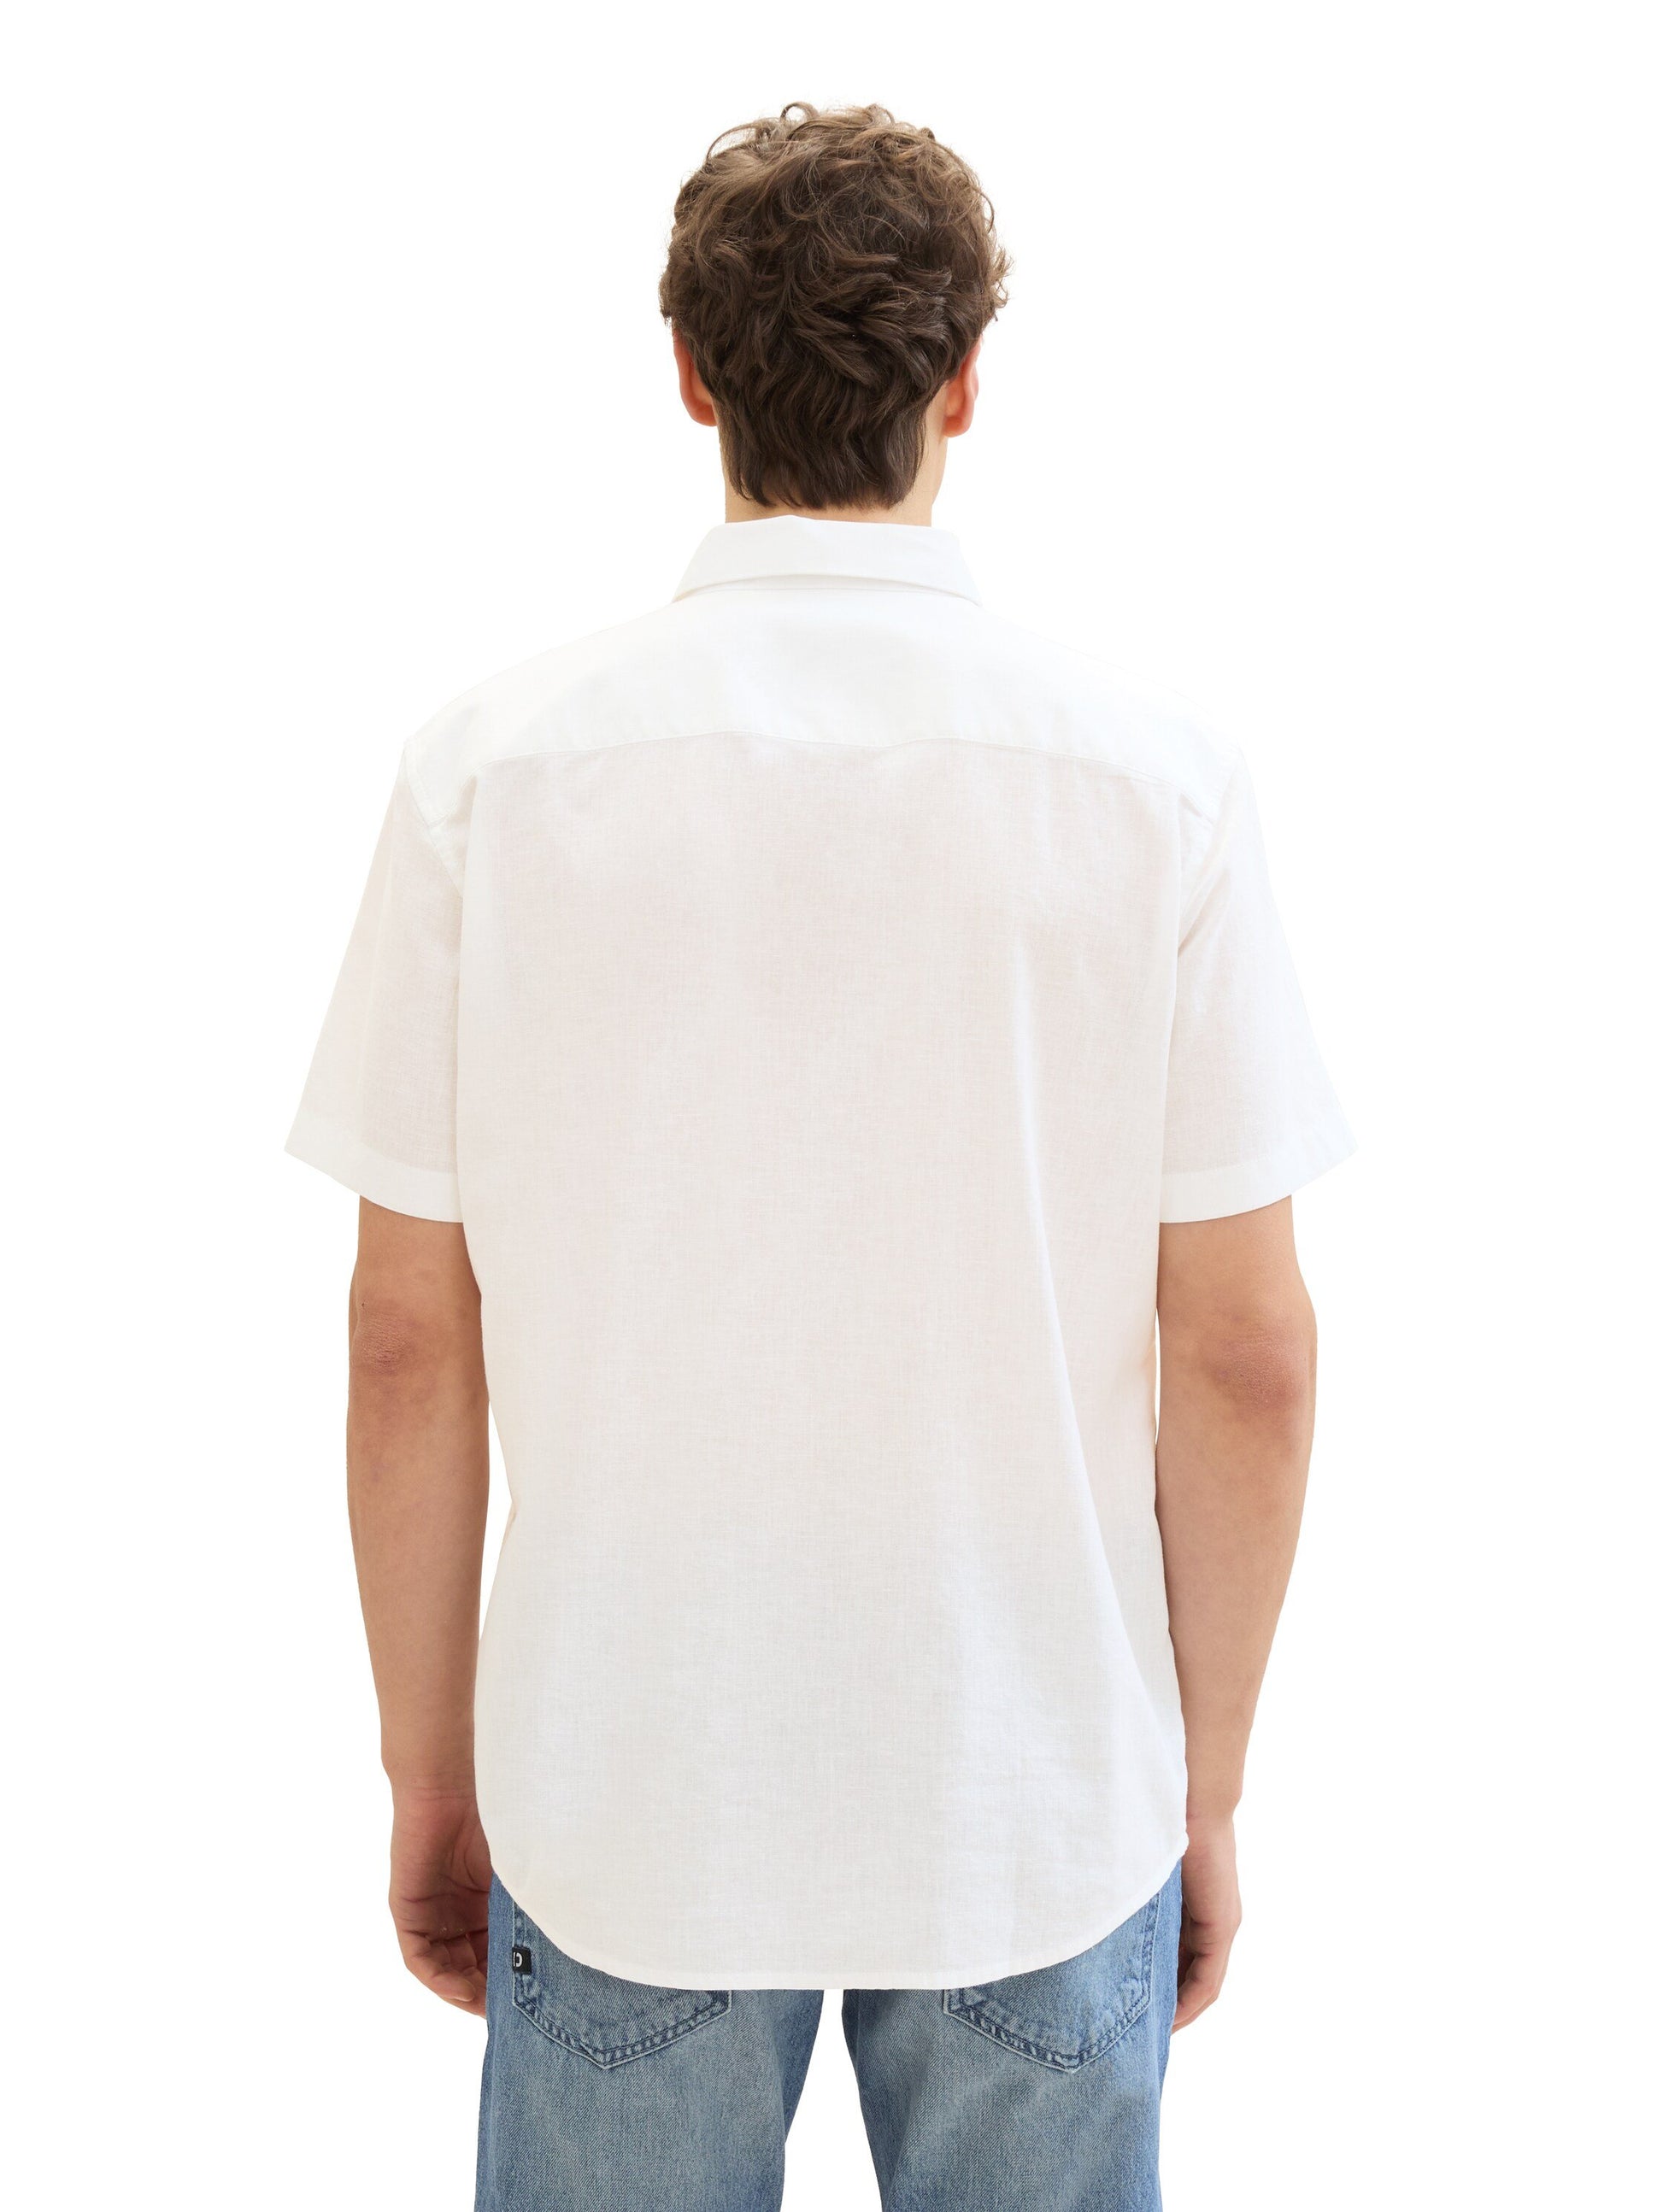 cotton linen shirt (White)